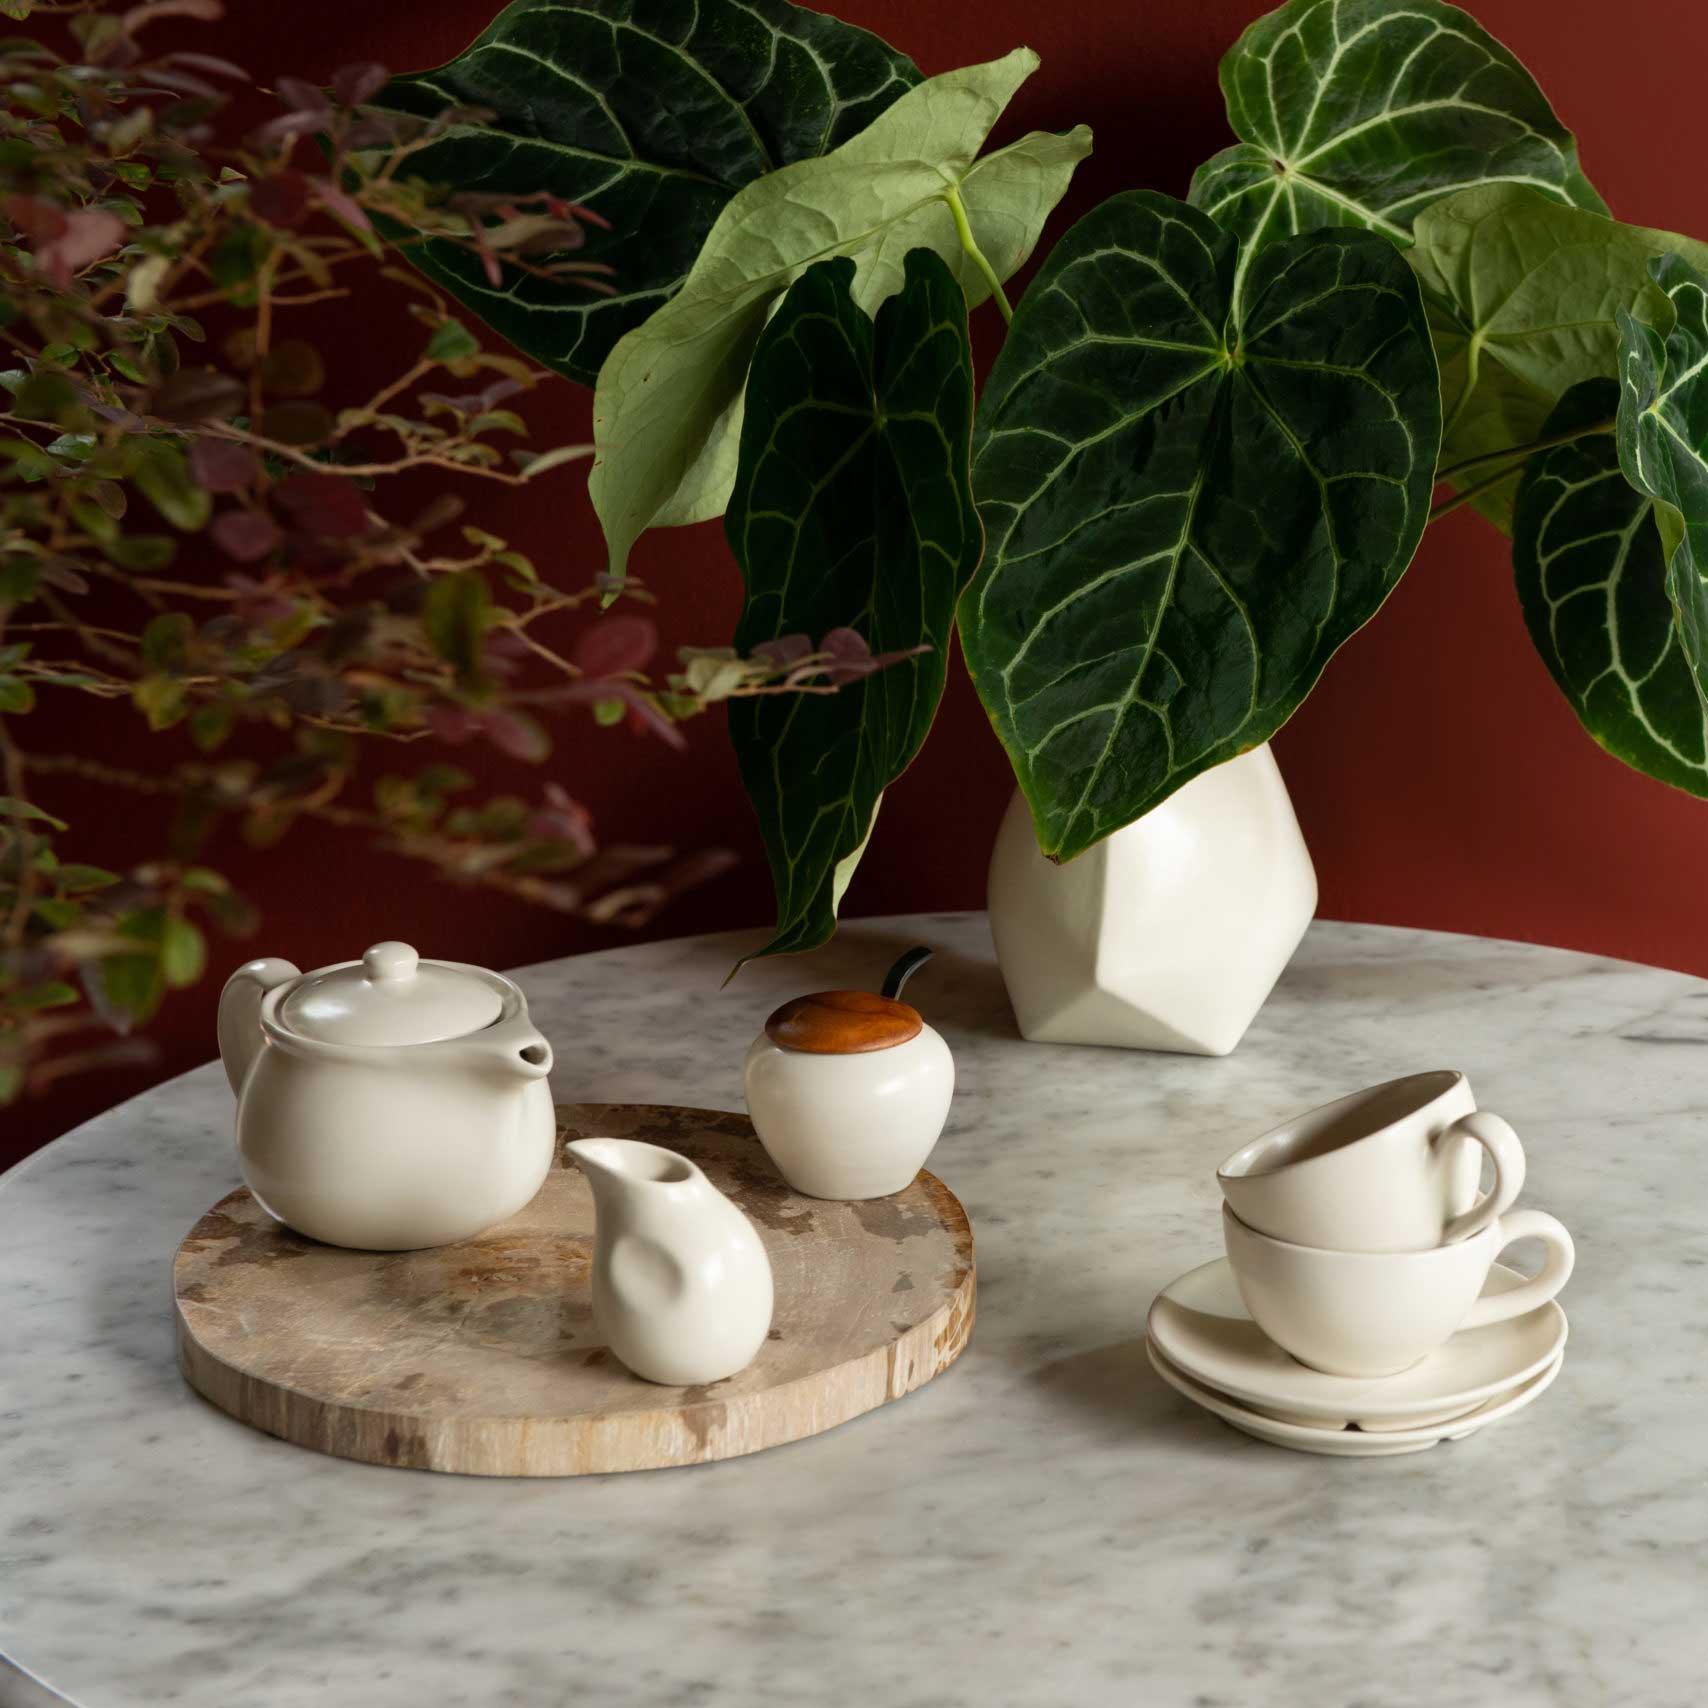 Classic Round Tea/Coffee Pot Cream Kahala - Jenggala Keramik Bali - Ceramic